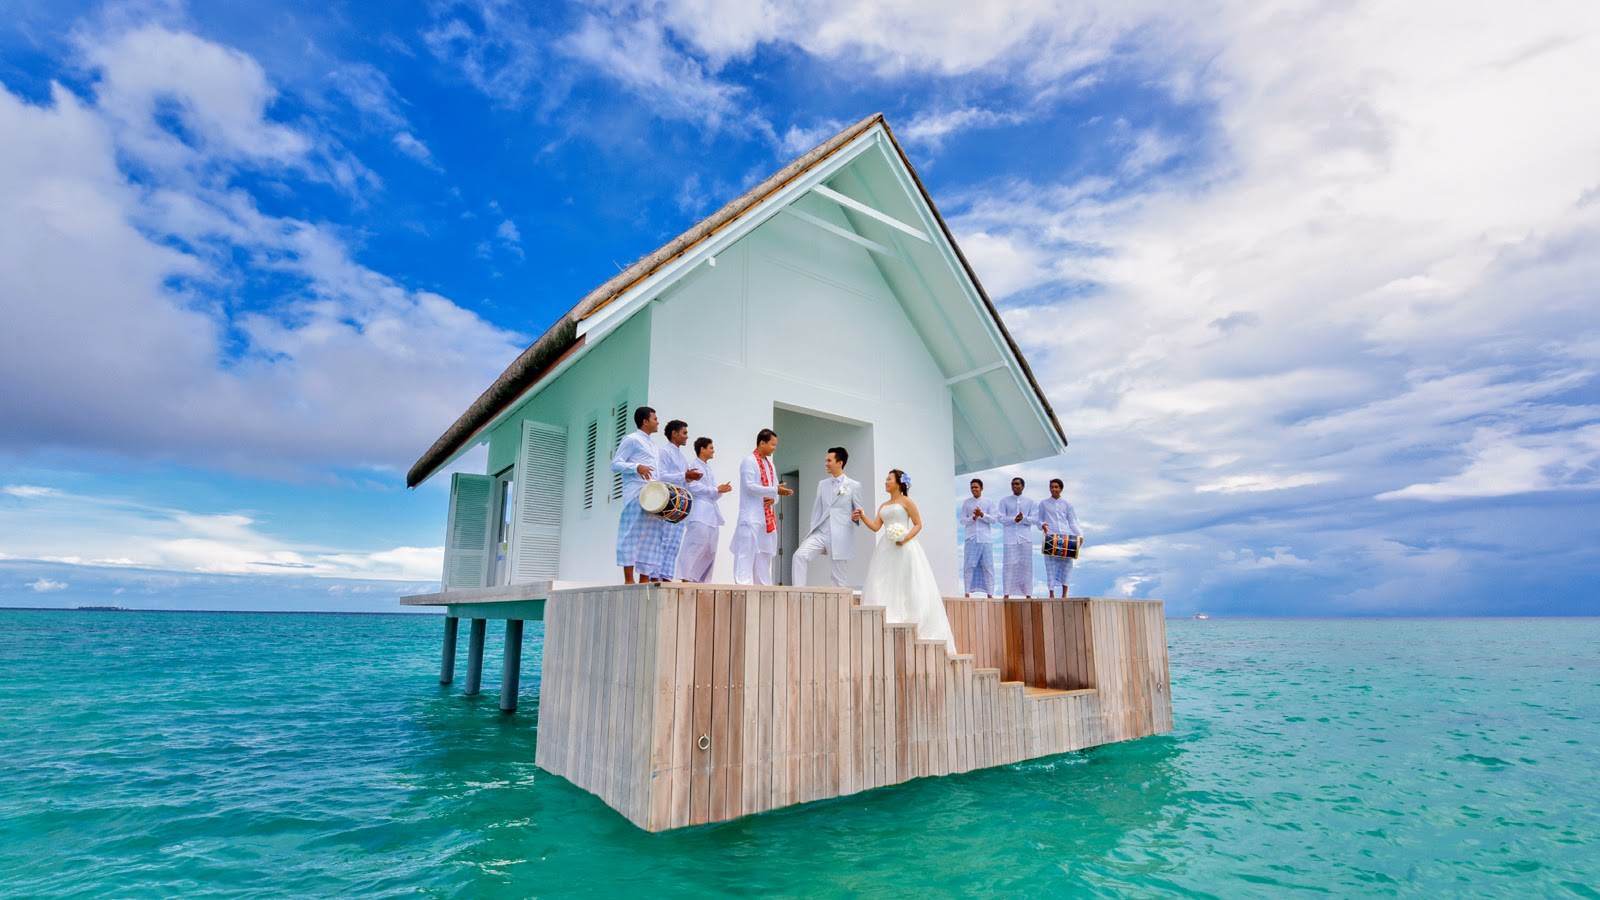 An Overwater Wedding Pavilion afloat in the UNESCO Biosphere Preserve, Four Seasons Resort Maldives at Landaa Giraavaru